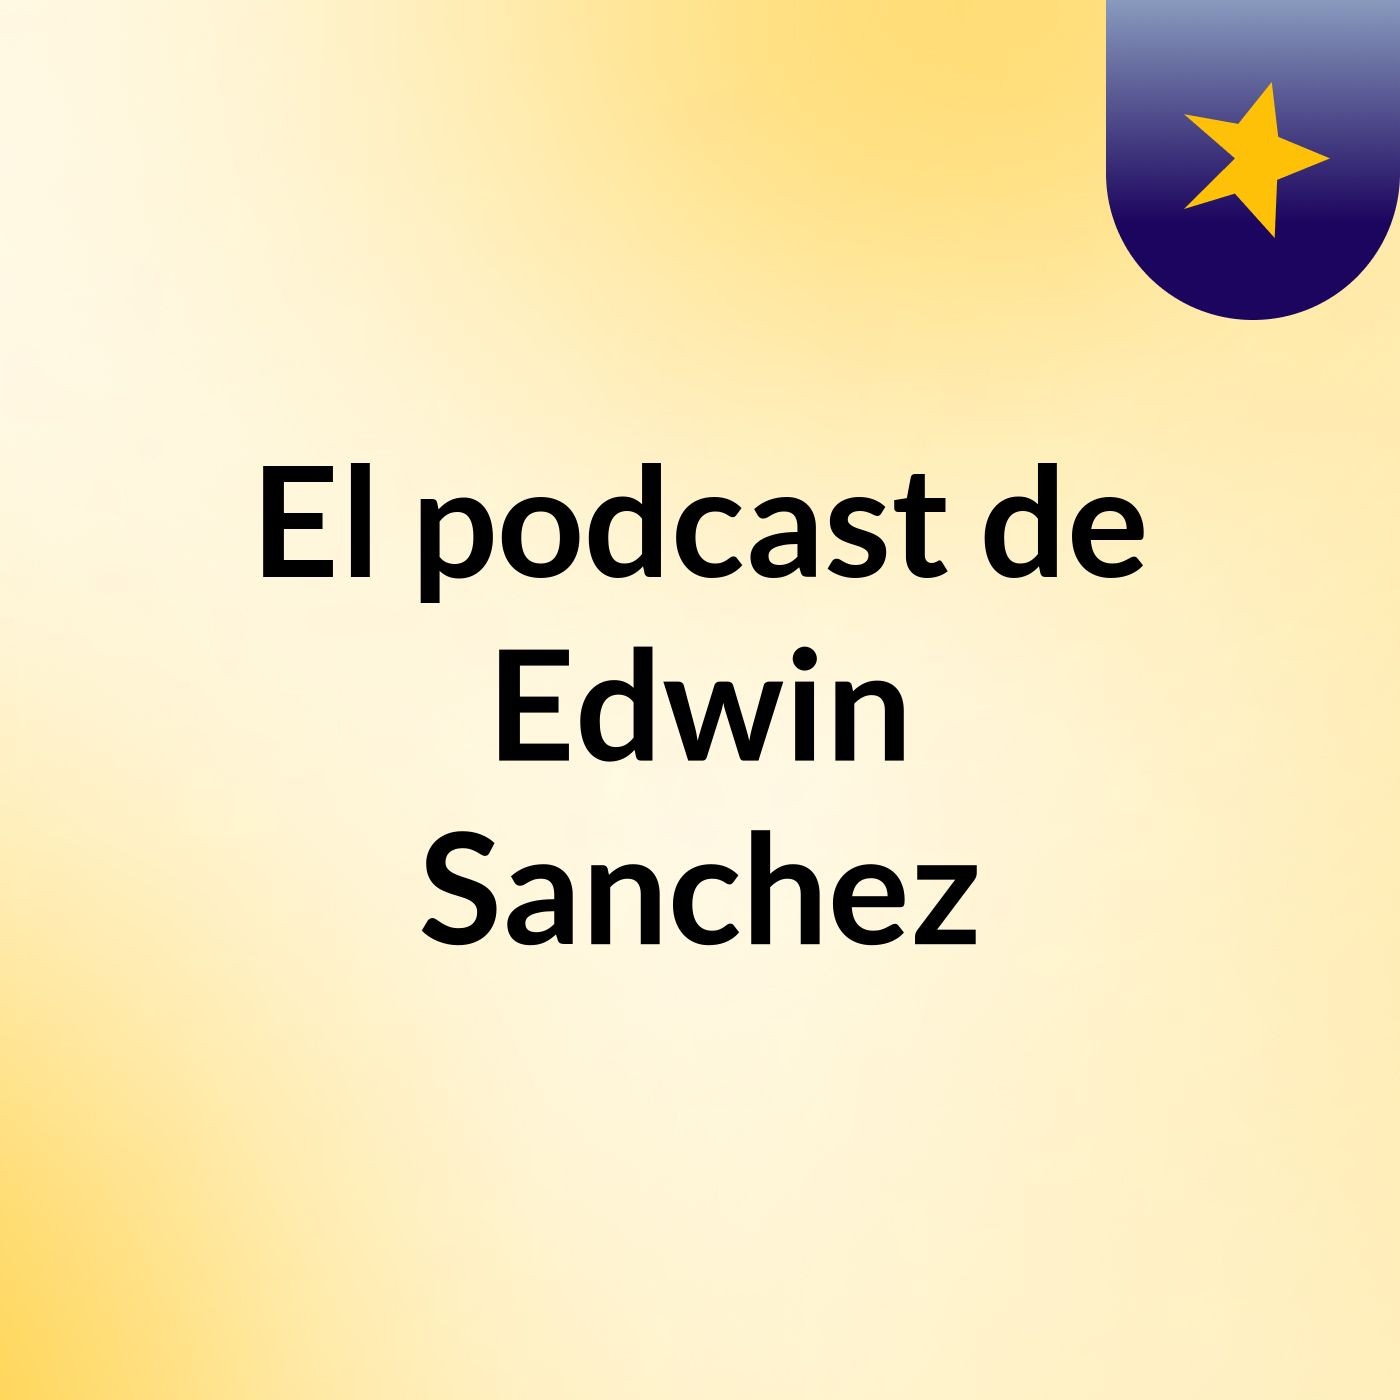 El podcast de Edwin Sanchez